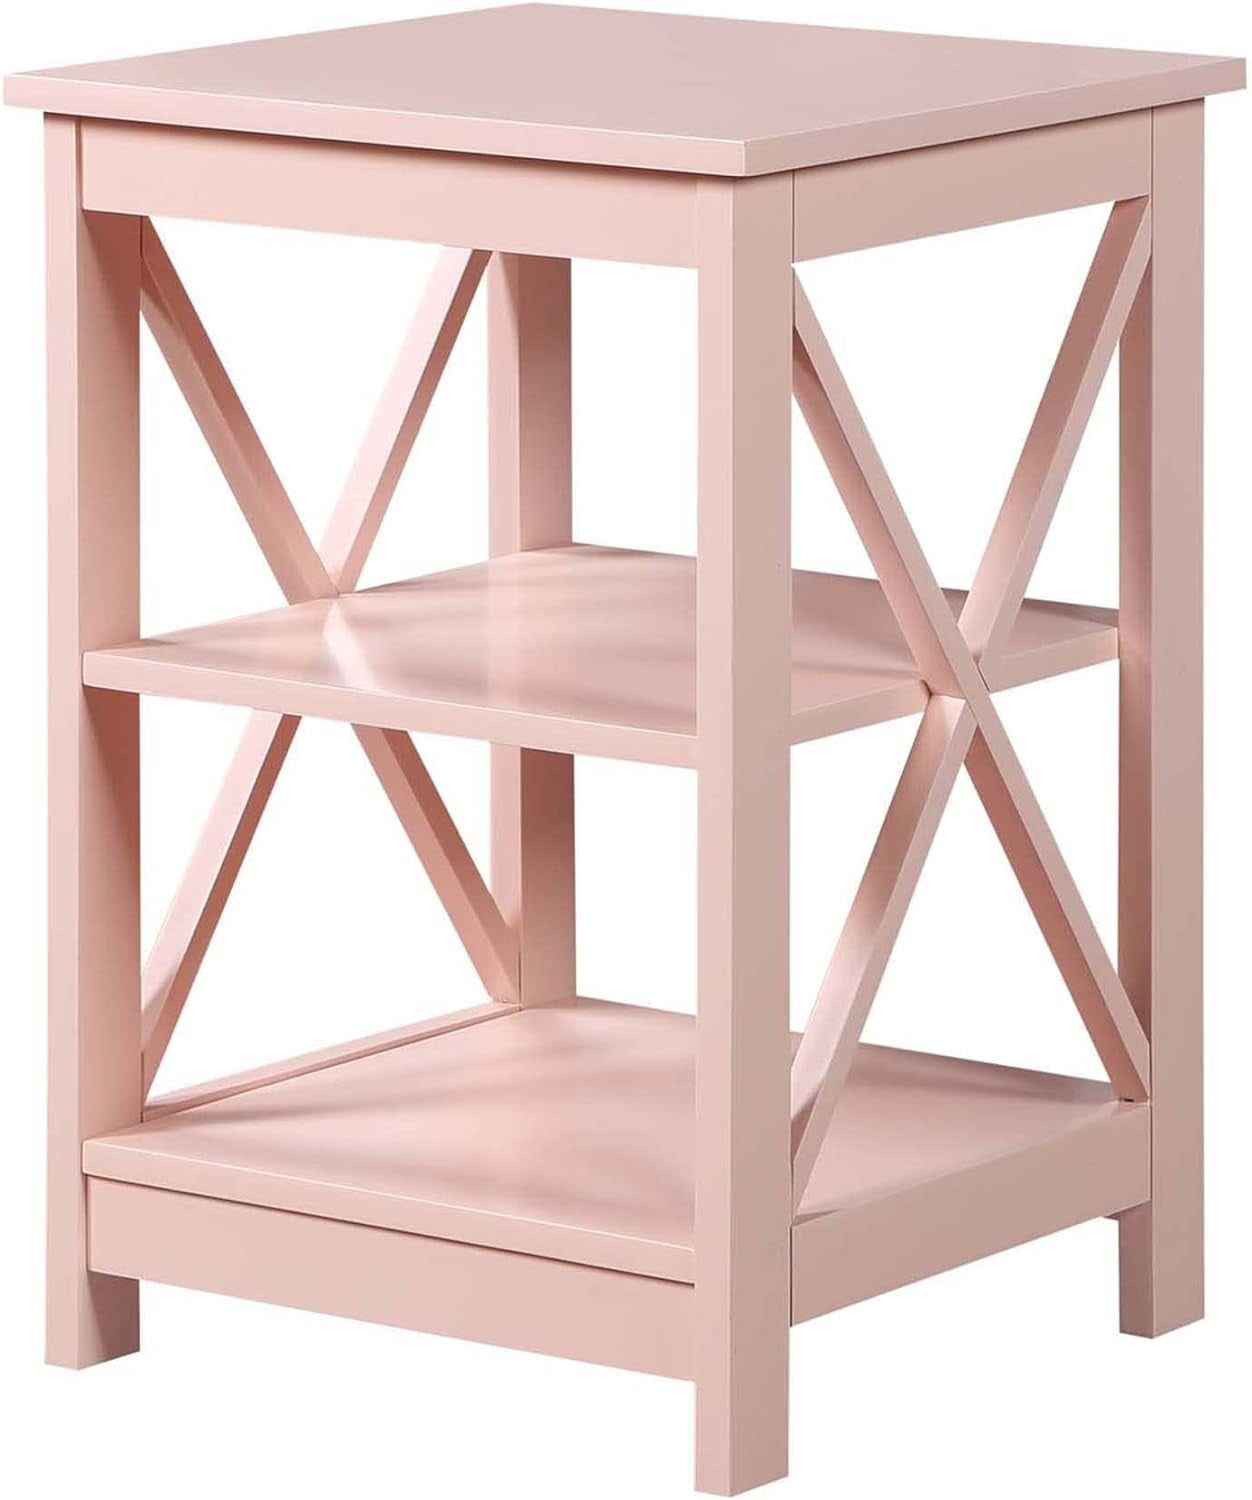 Oxford Coastal Farmhouse Blush Pink Wood End Table with Shelves